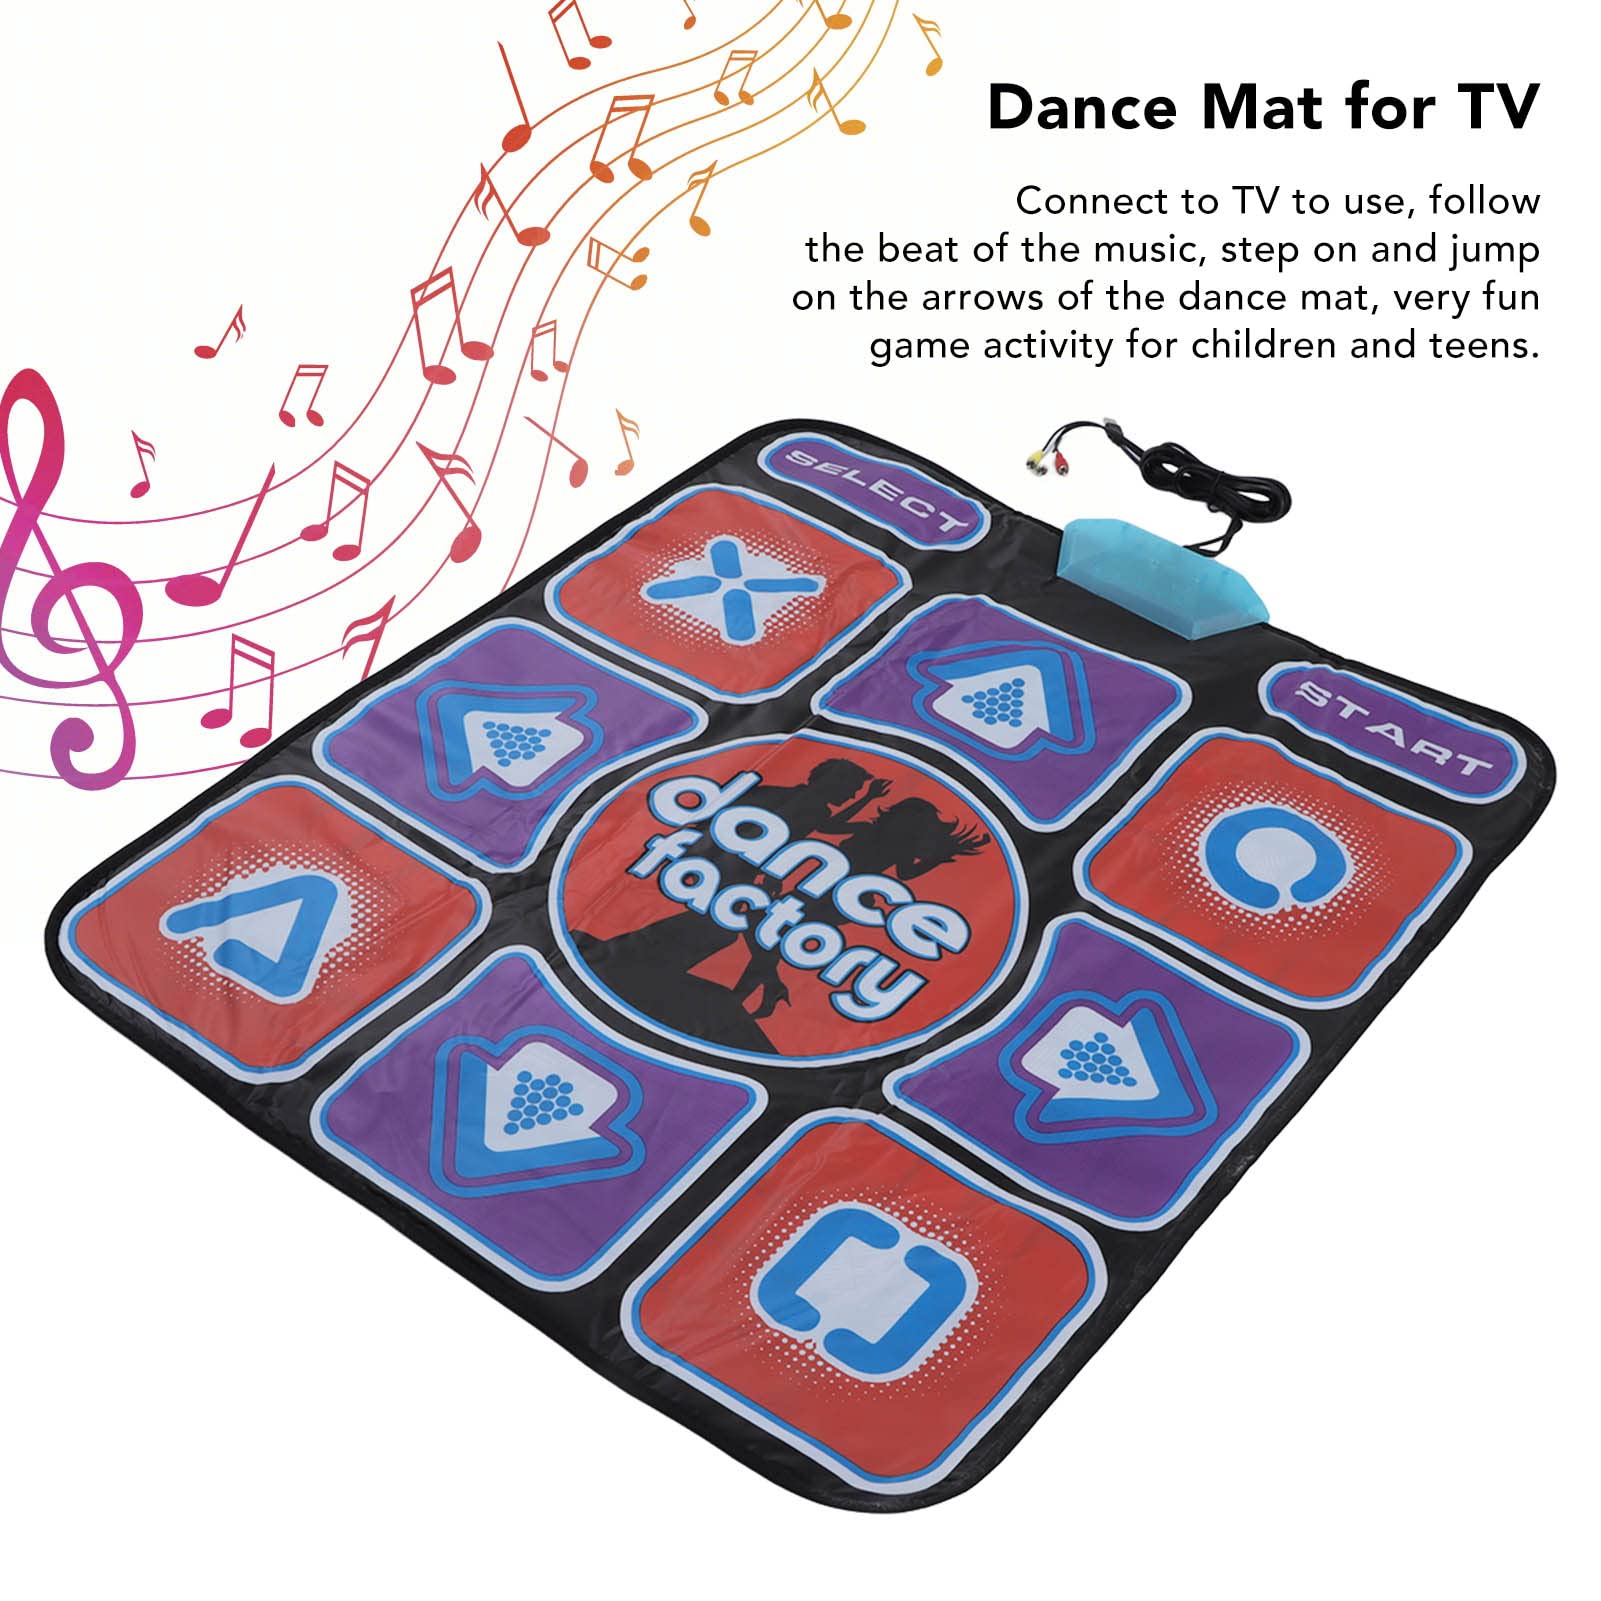 Pilipane Dance Mat,Musical Electronic Dance Mat Gift for 3 to 12 Year Old Girls Boys,Built in Music,Soft Prevent Slip Musical Dance Mat,Christmas Birthday Gifts for Boys Girls,for TV